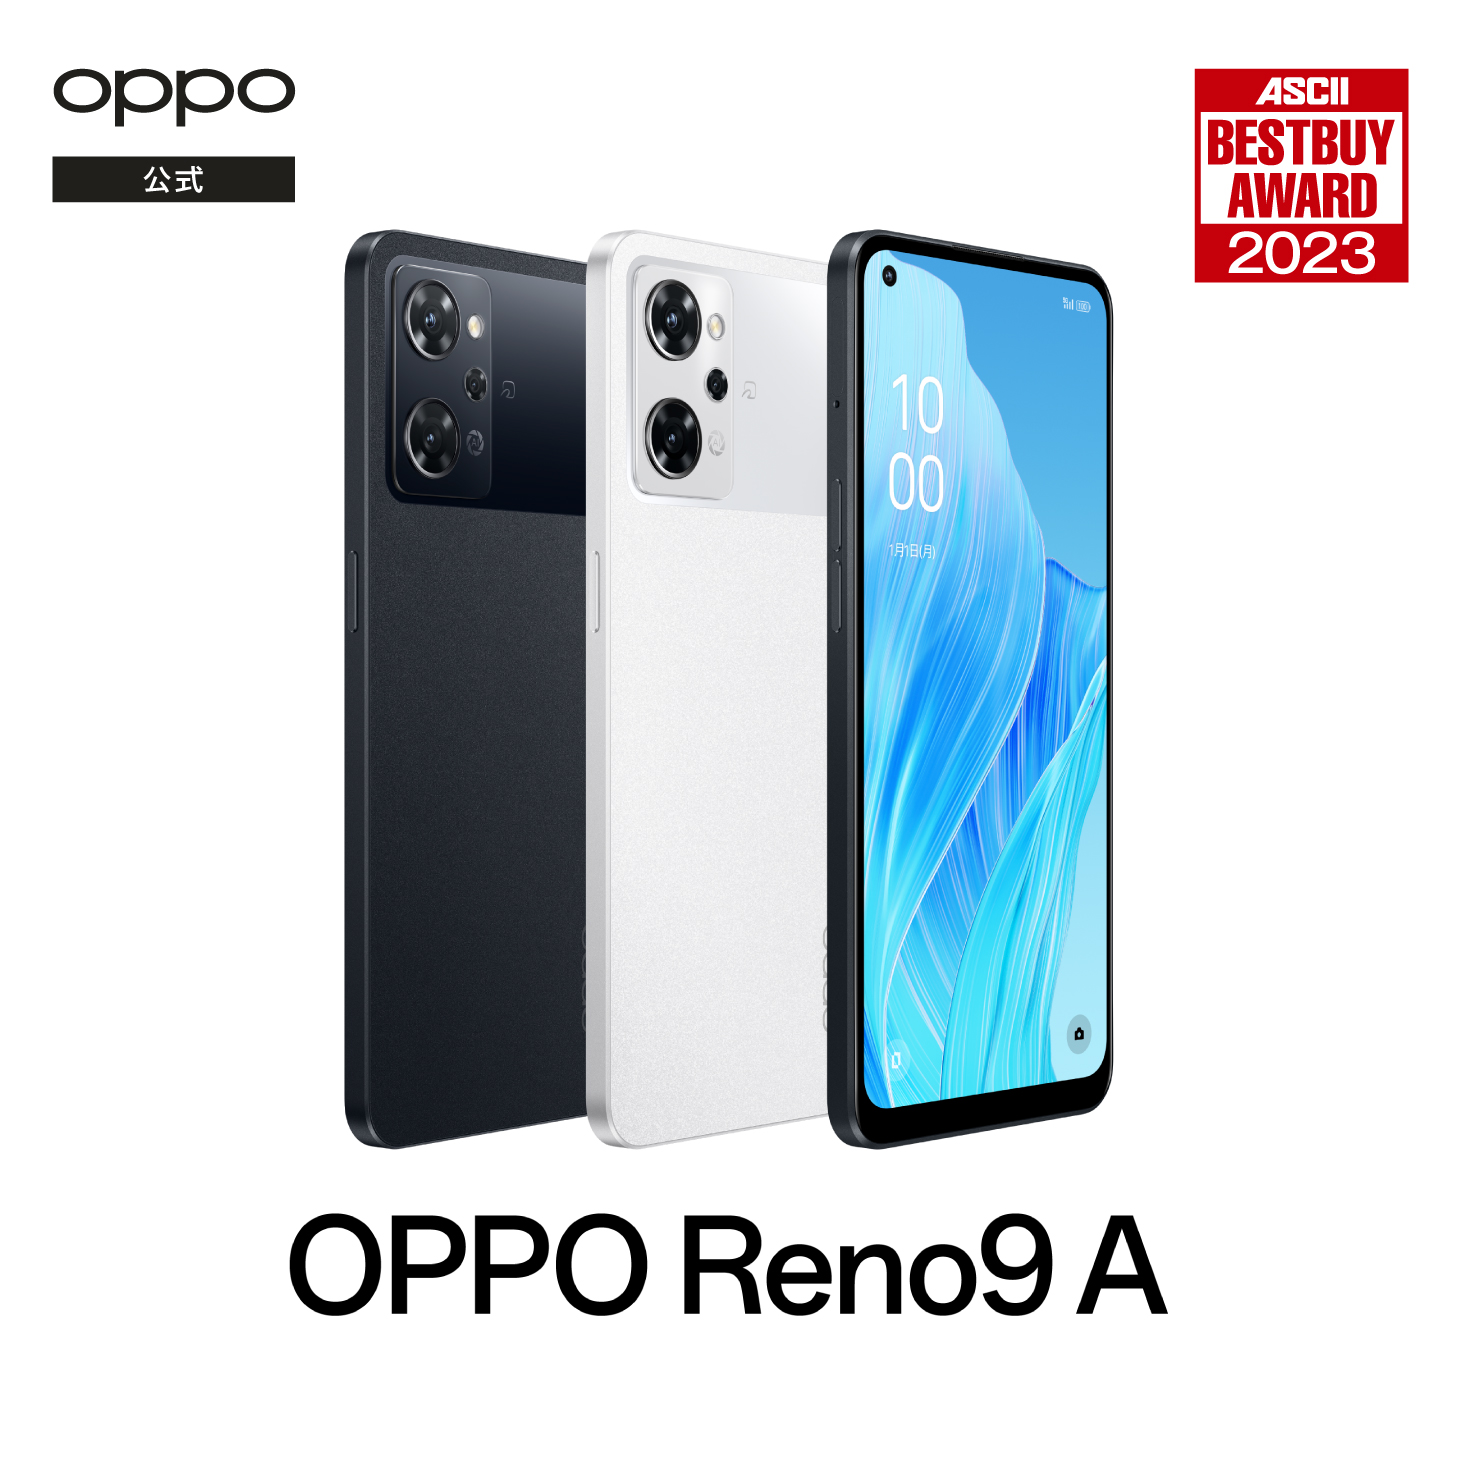 OPPO Reno9 A SIMフリー 5G スマホ Android 本体 新品 アンドロイド スマートフォン シムフリー 端末 RAM8GB 防水  指紋認証 おサイフケータイ 有機EL DSDV